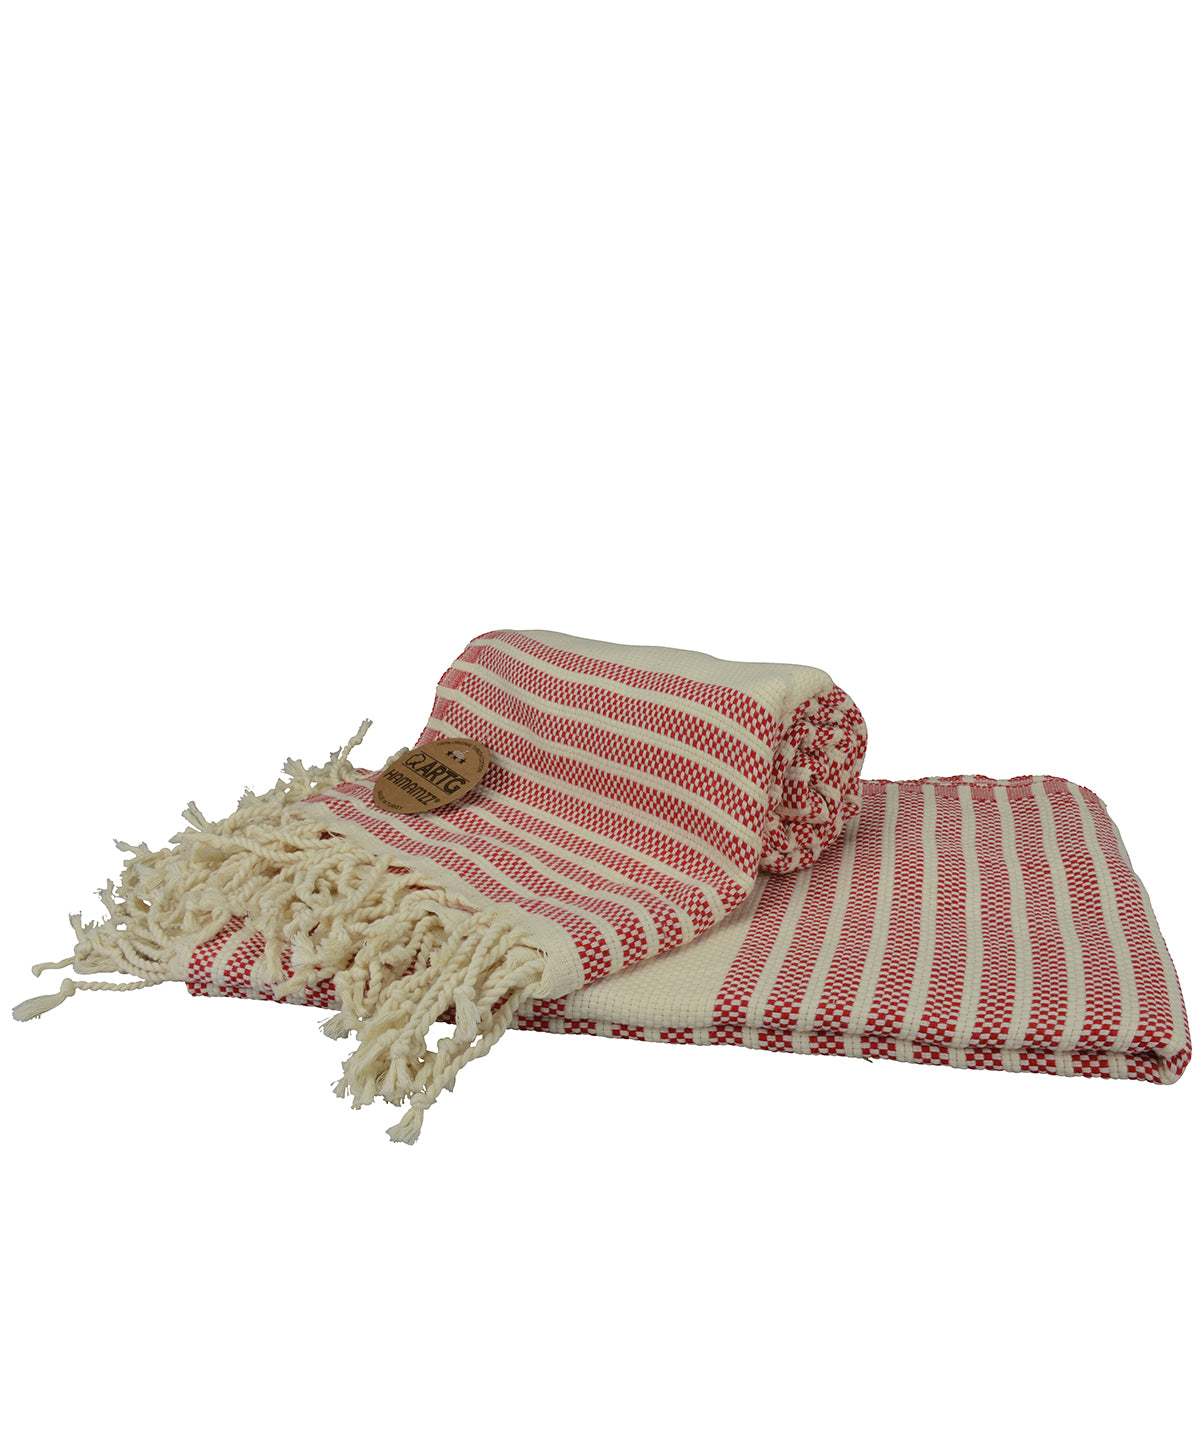 Personalised Towels - Stripes A&R Towels ARTG® Hamamzz® peshtemal towel